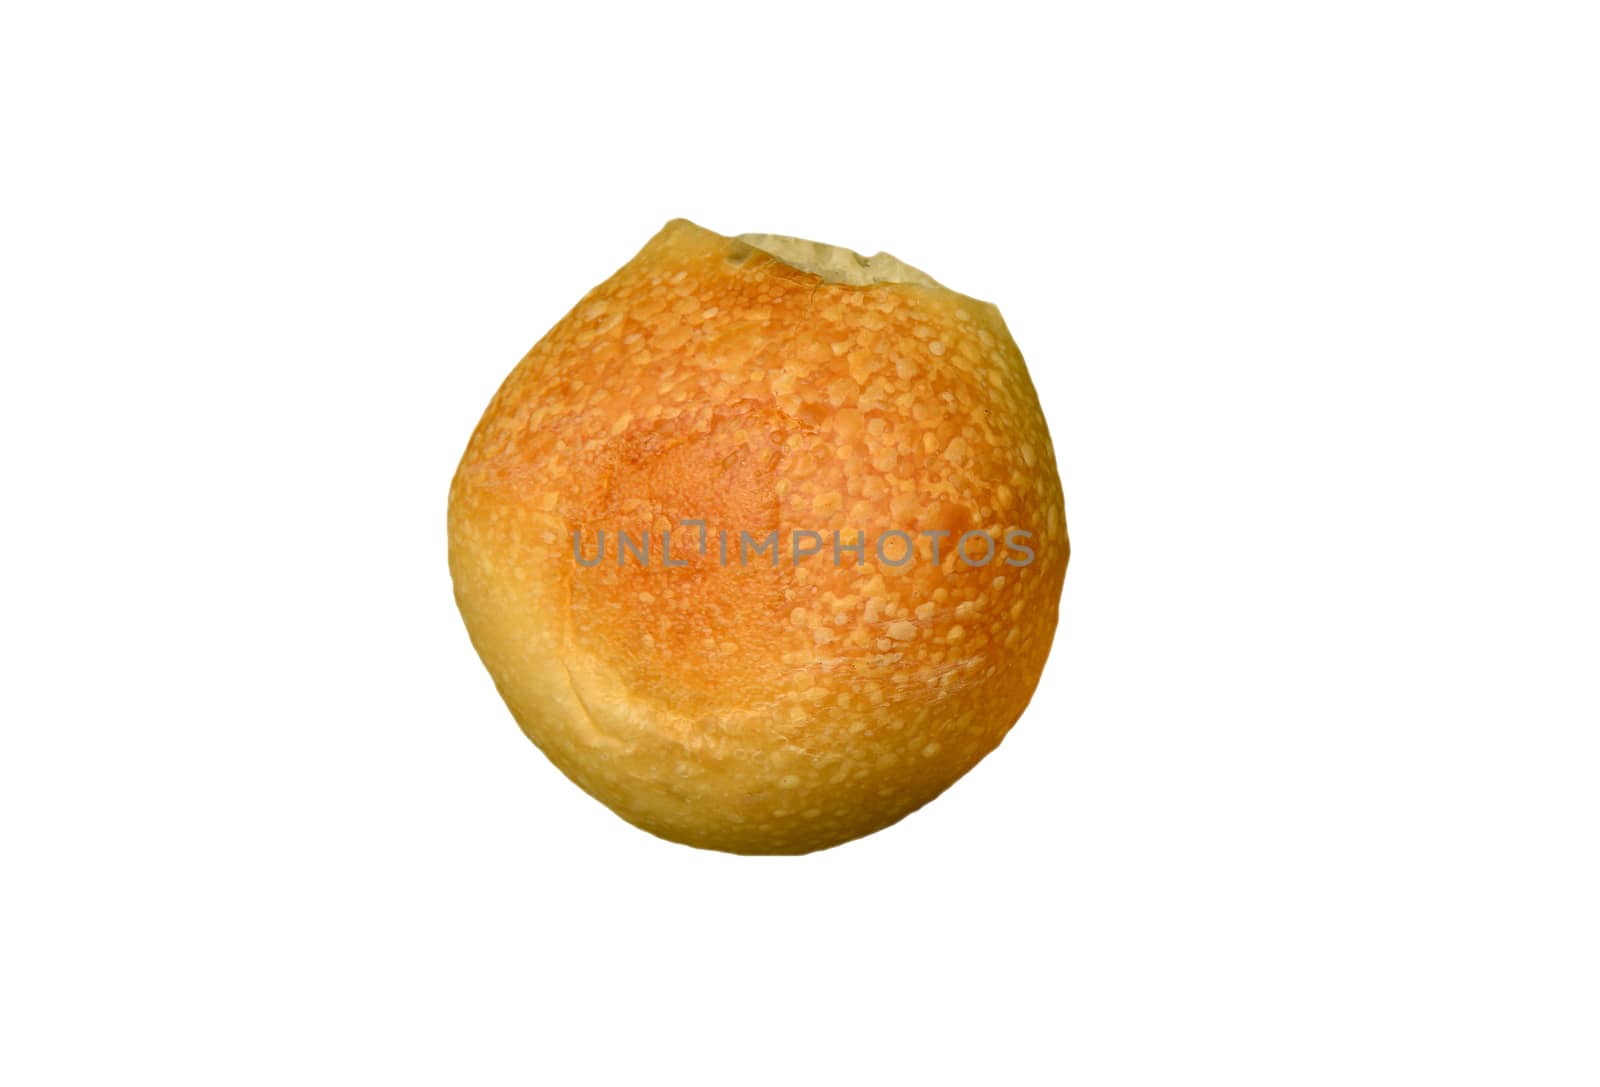 fresh bread bun by ftlaudgirl